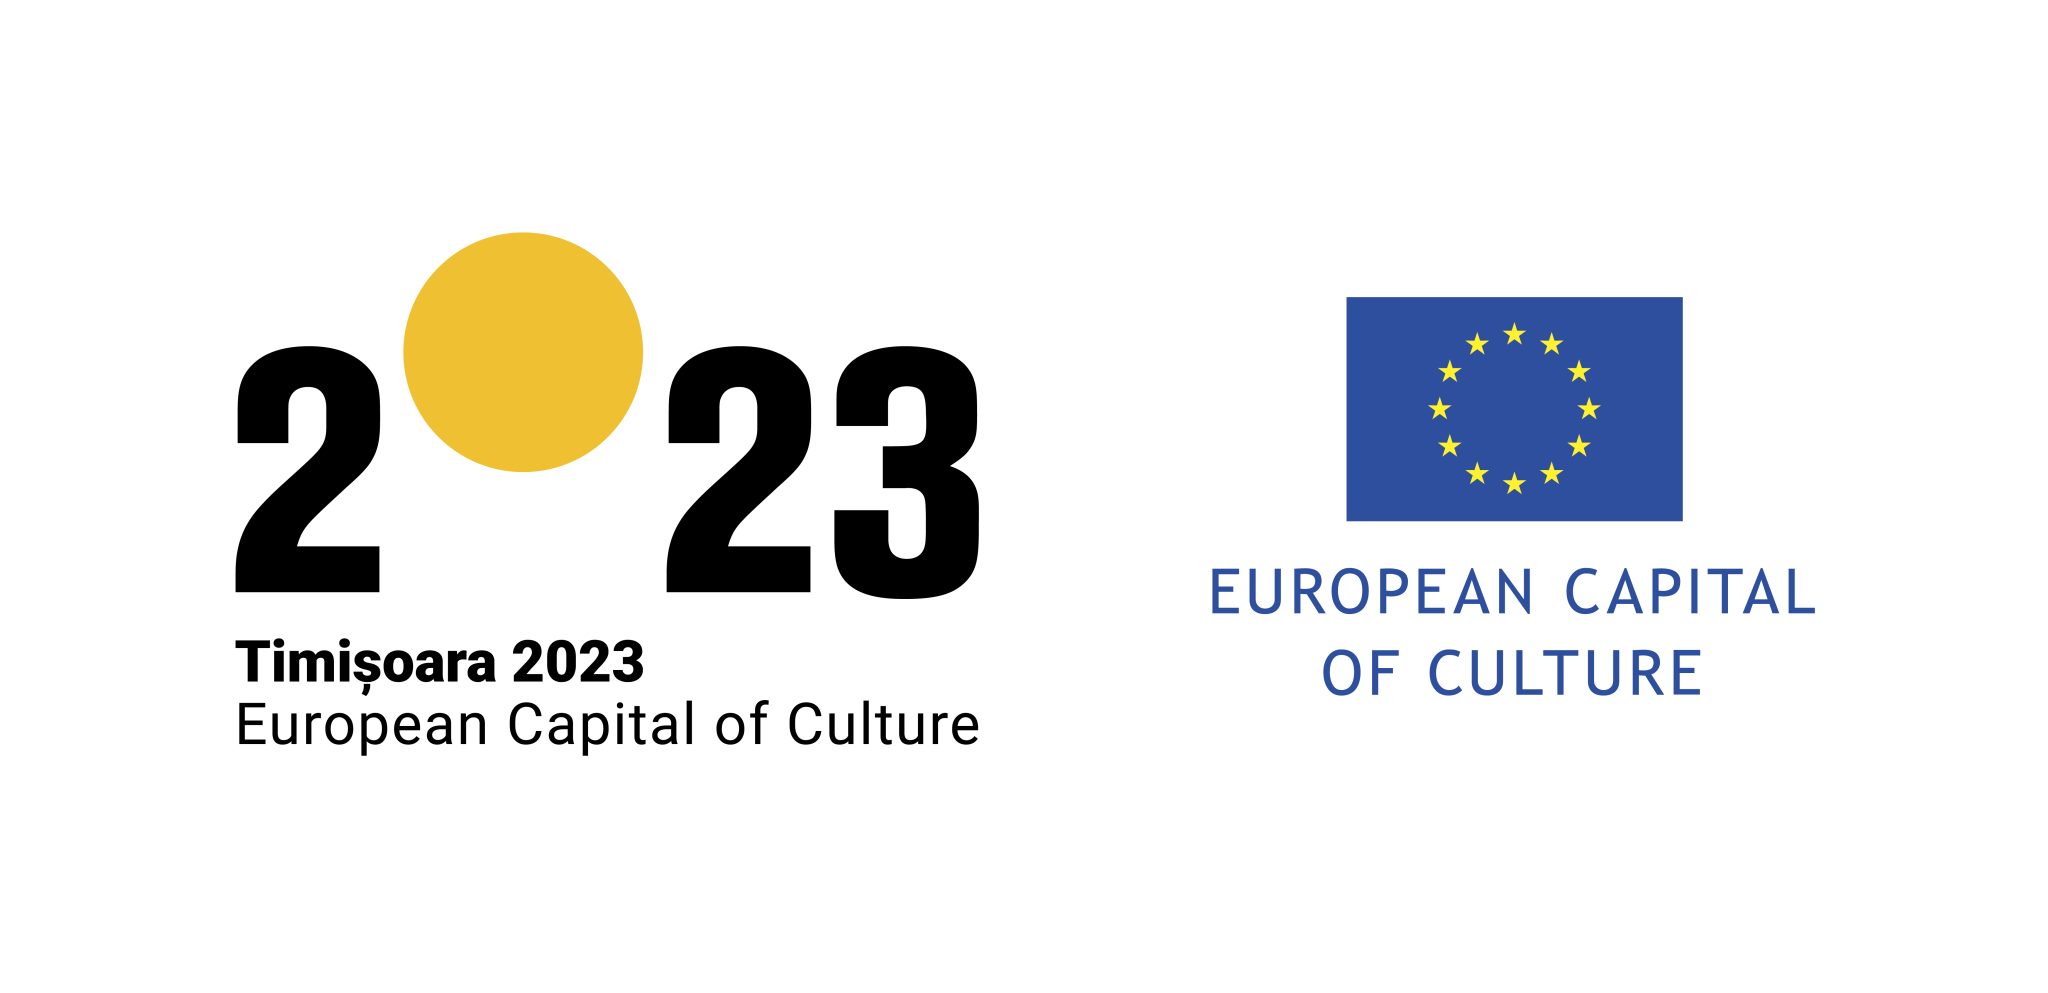 Timisoara 2023 European Capital of Culture